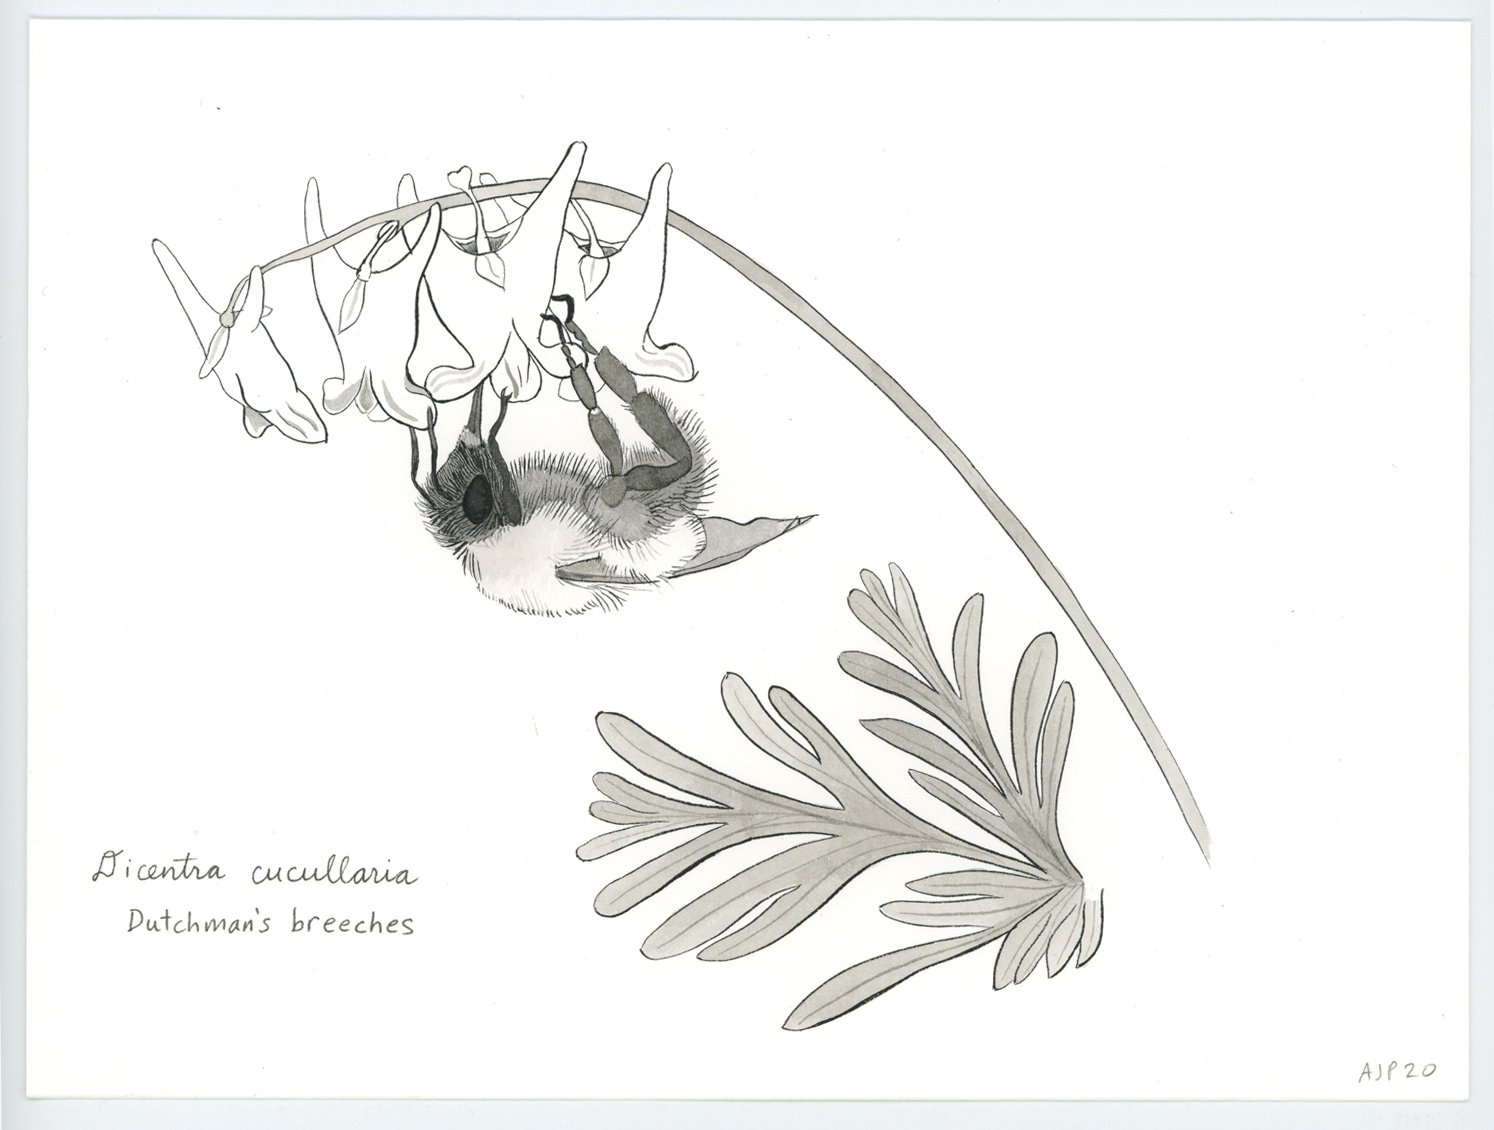 Dicentra cucullaria / Dutchman's breeches